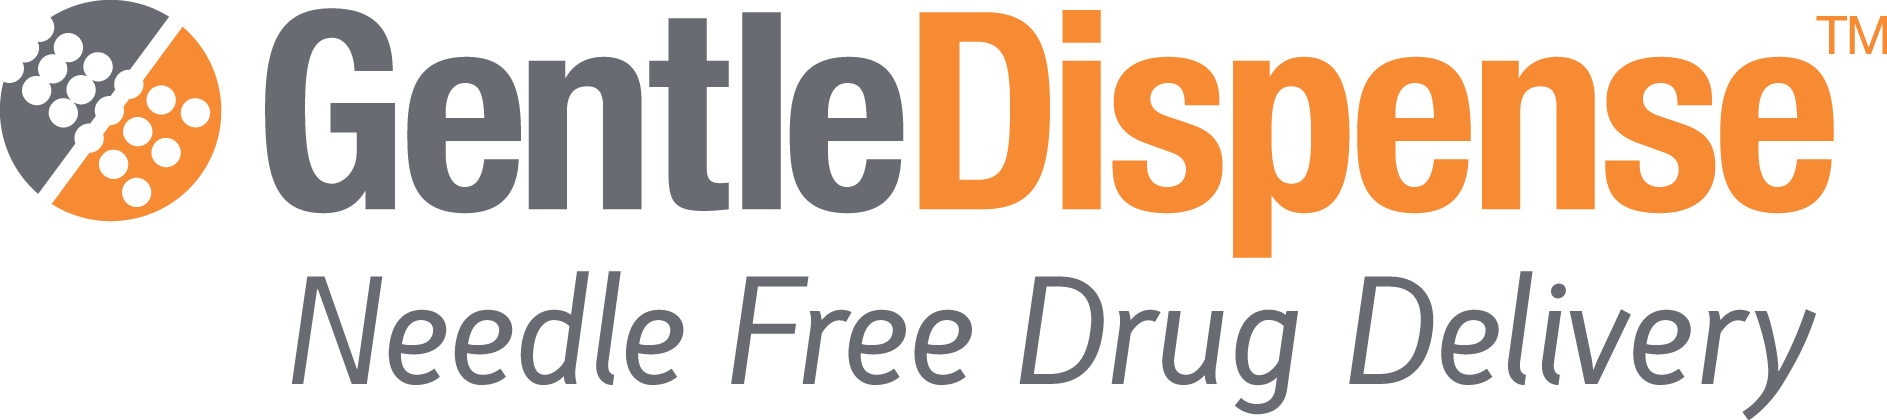 GentleDispense_Needle Free Drug Delivery